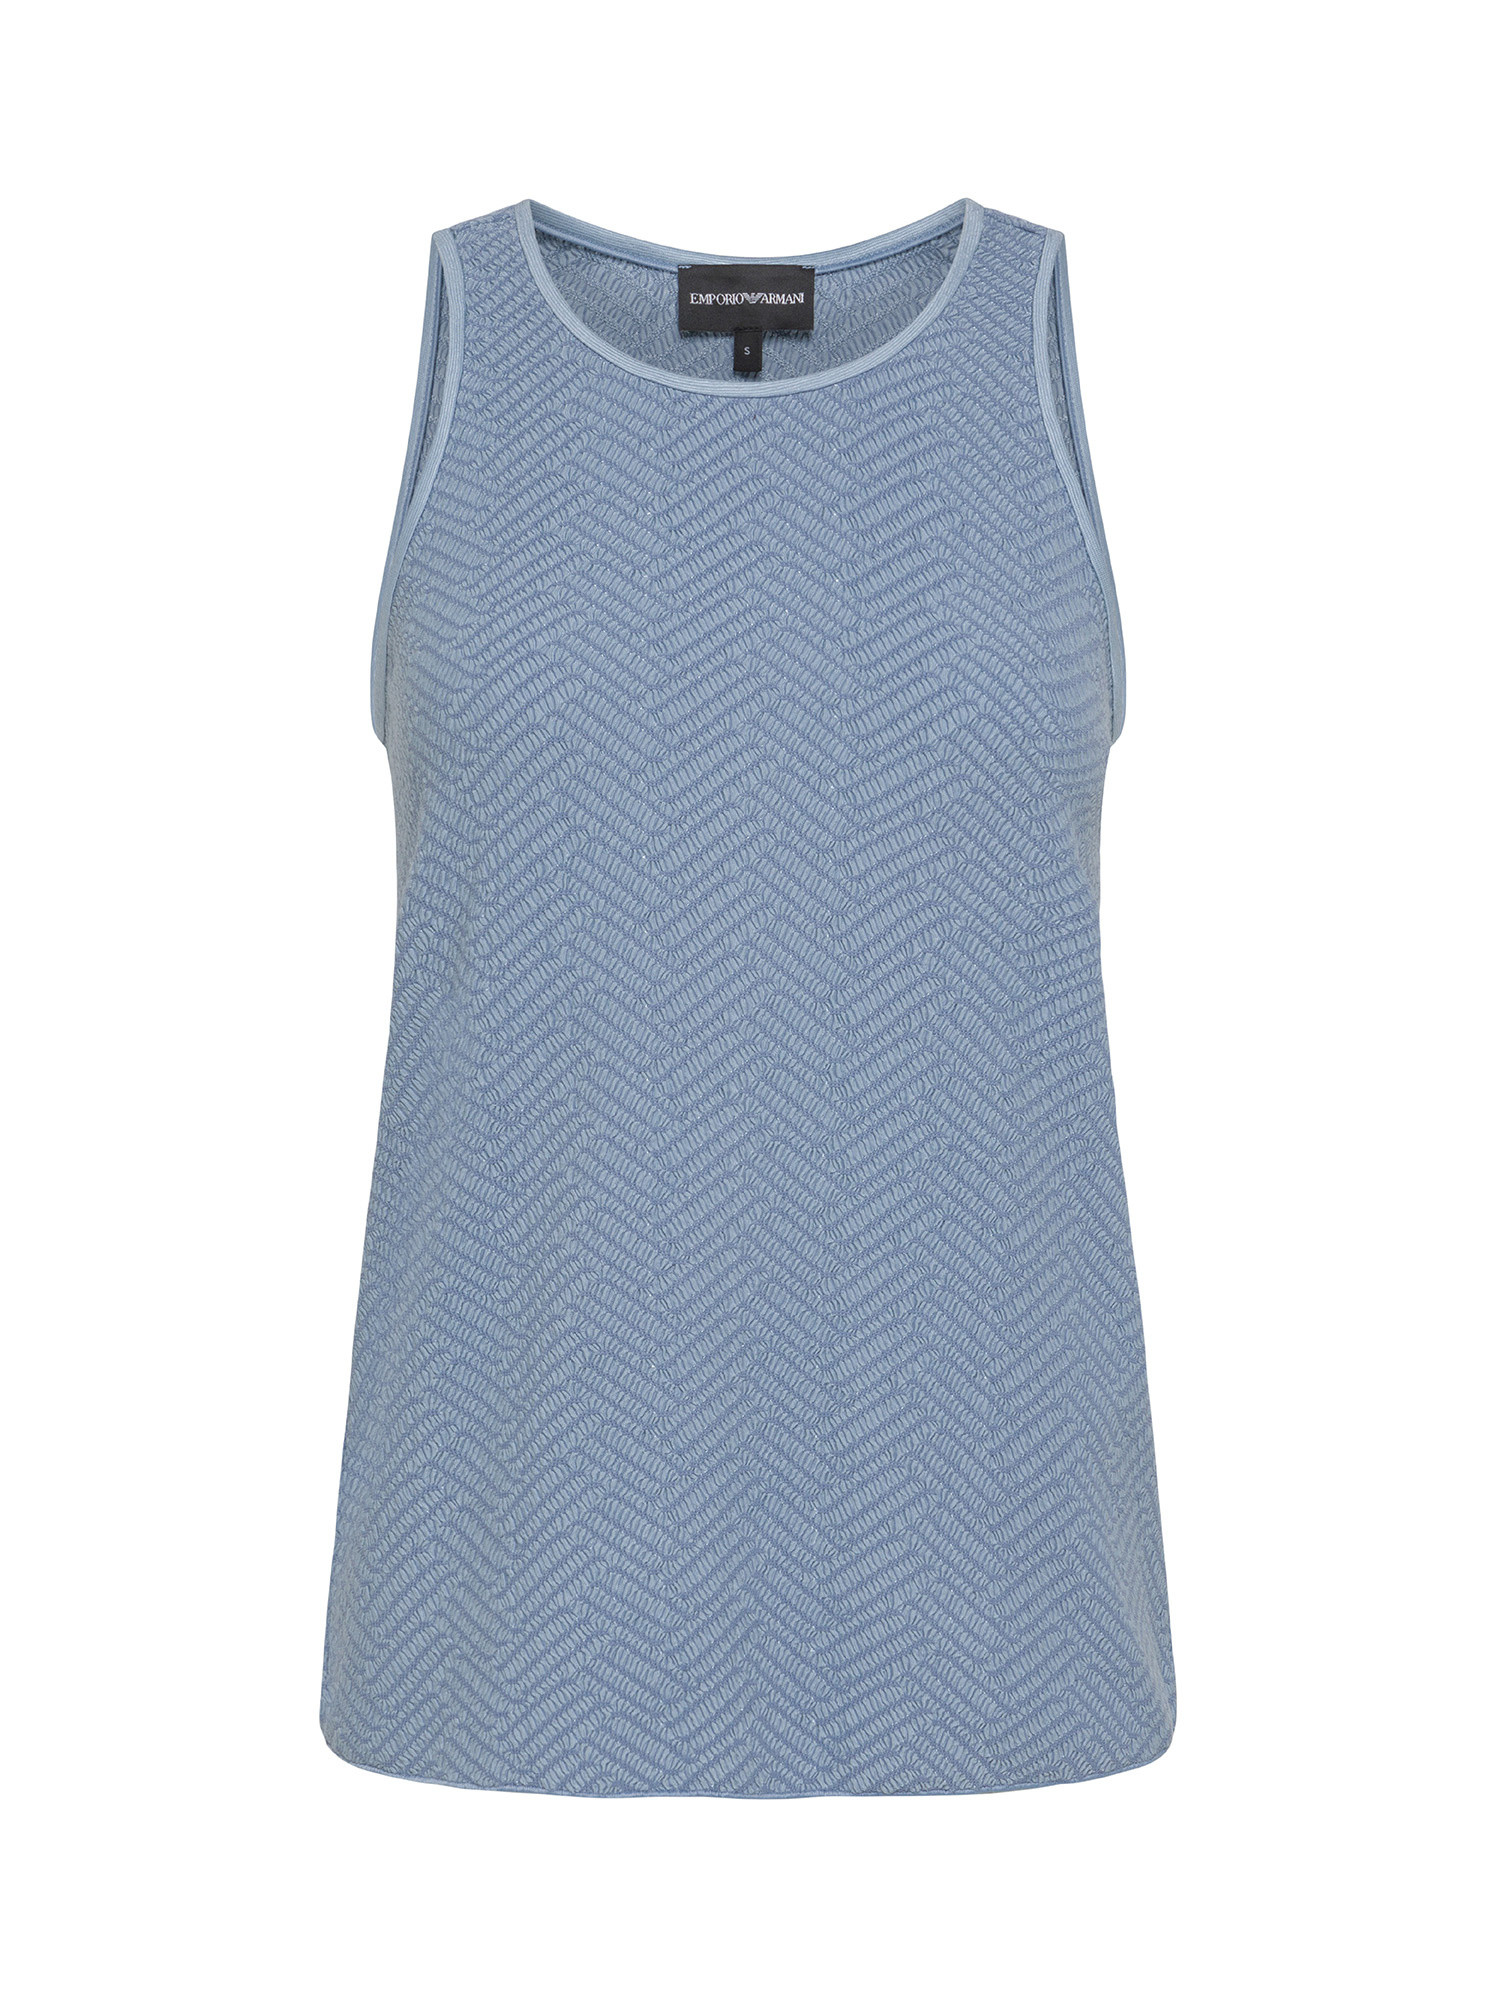 Emporio Armani - Vest with pattern, Light Blue, large image number 0